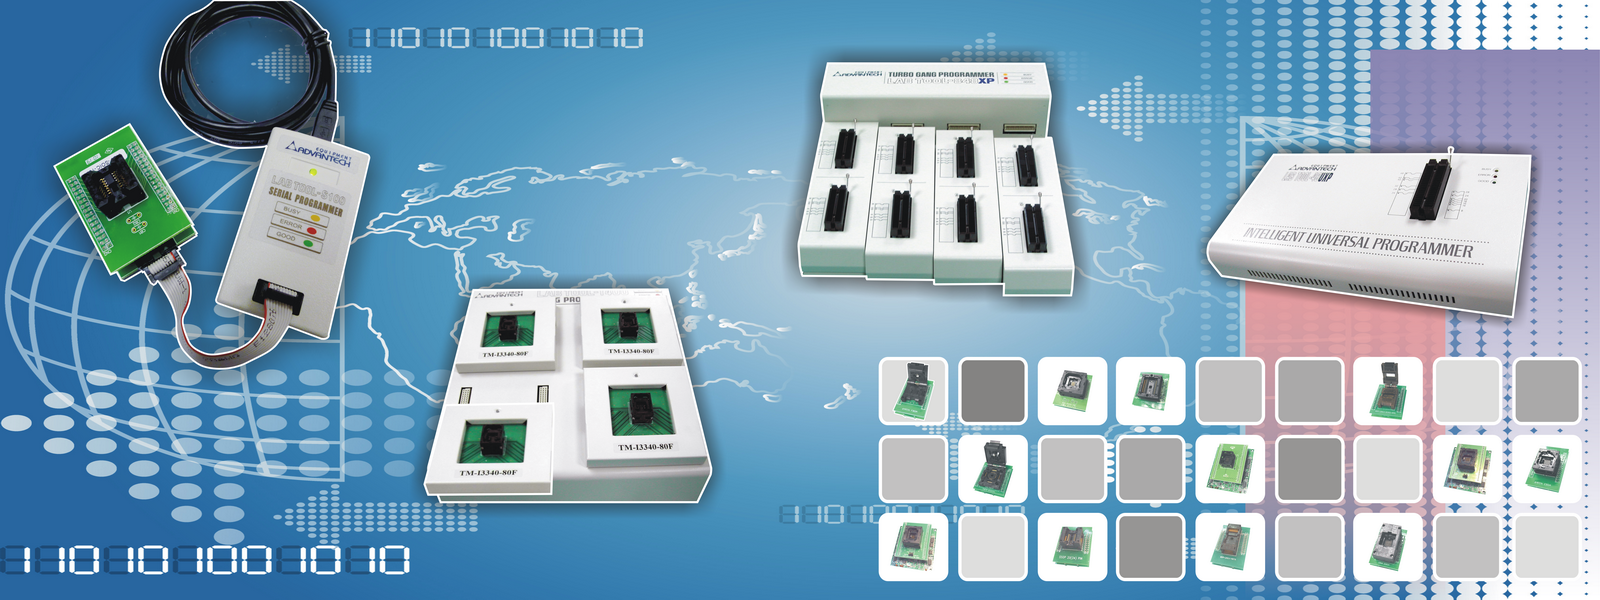 AEC Network Control Module IPP-3100